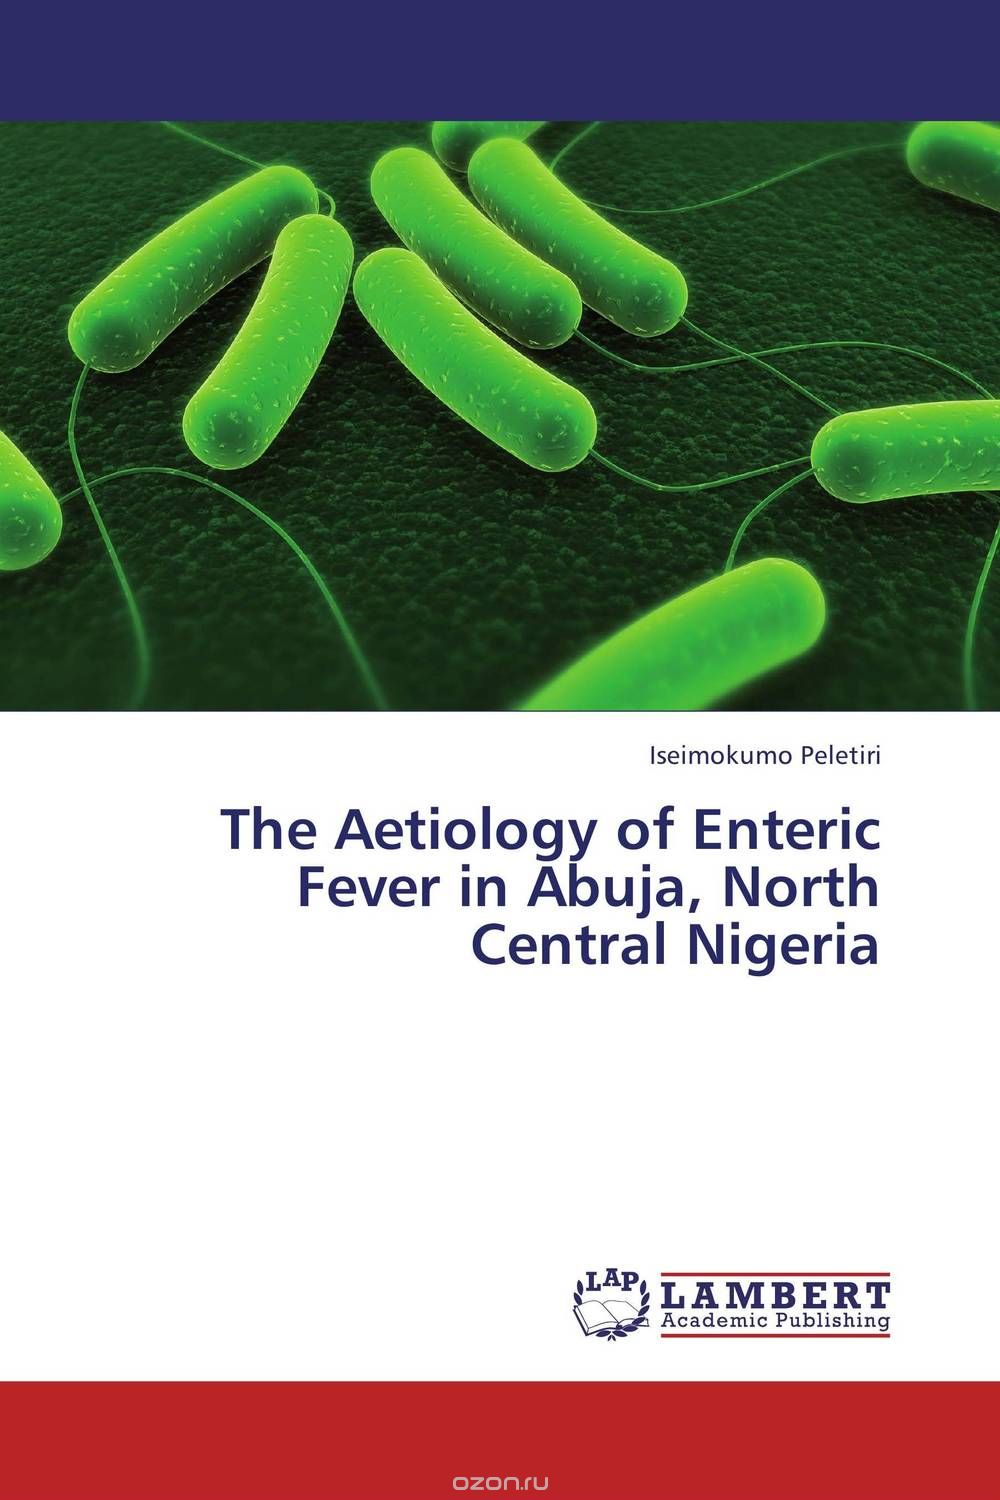 Скачать книгу "The Aetiology of Enteric Fever in Abuja, North Central Nigeria"